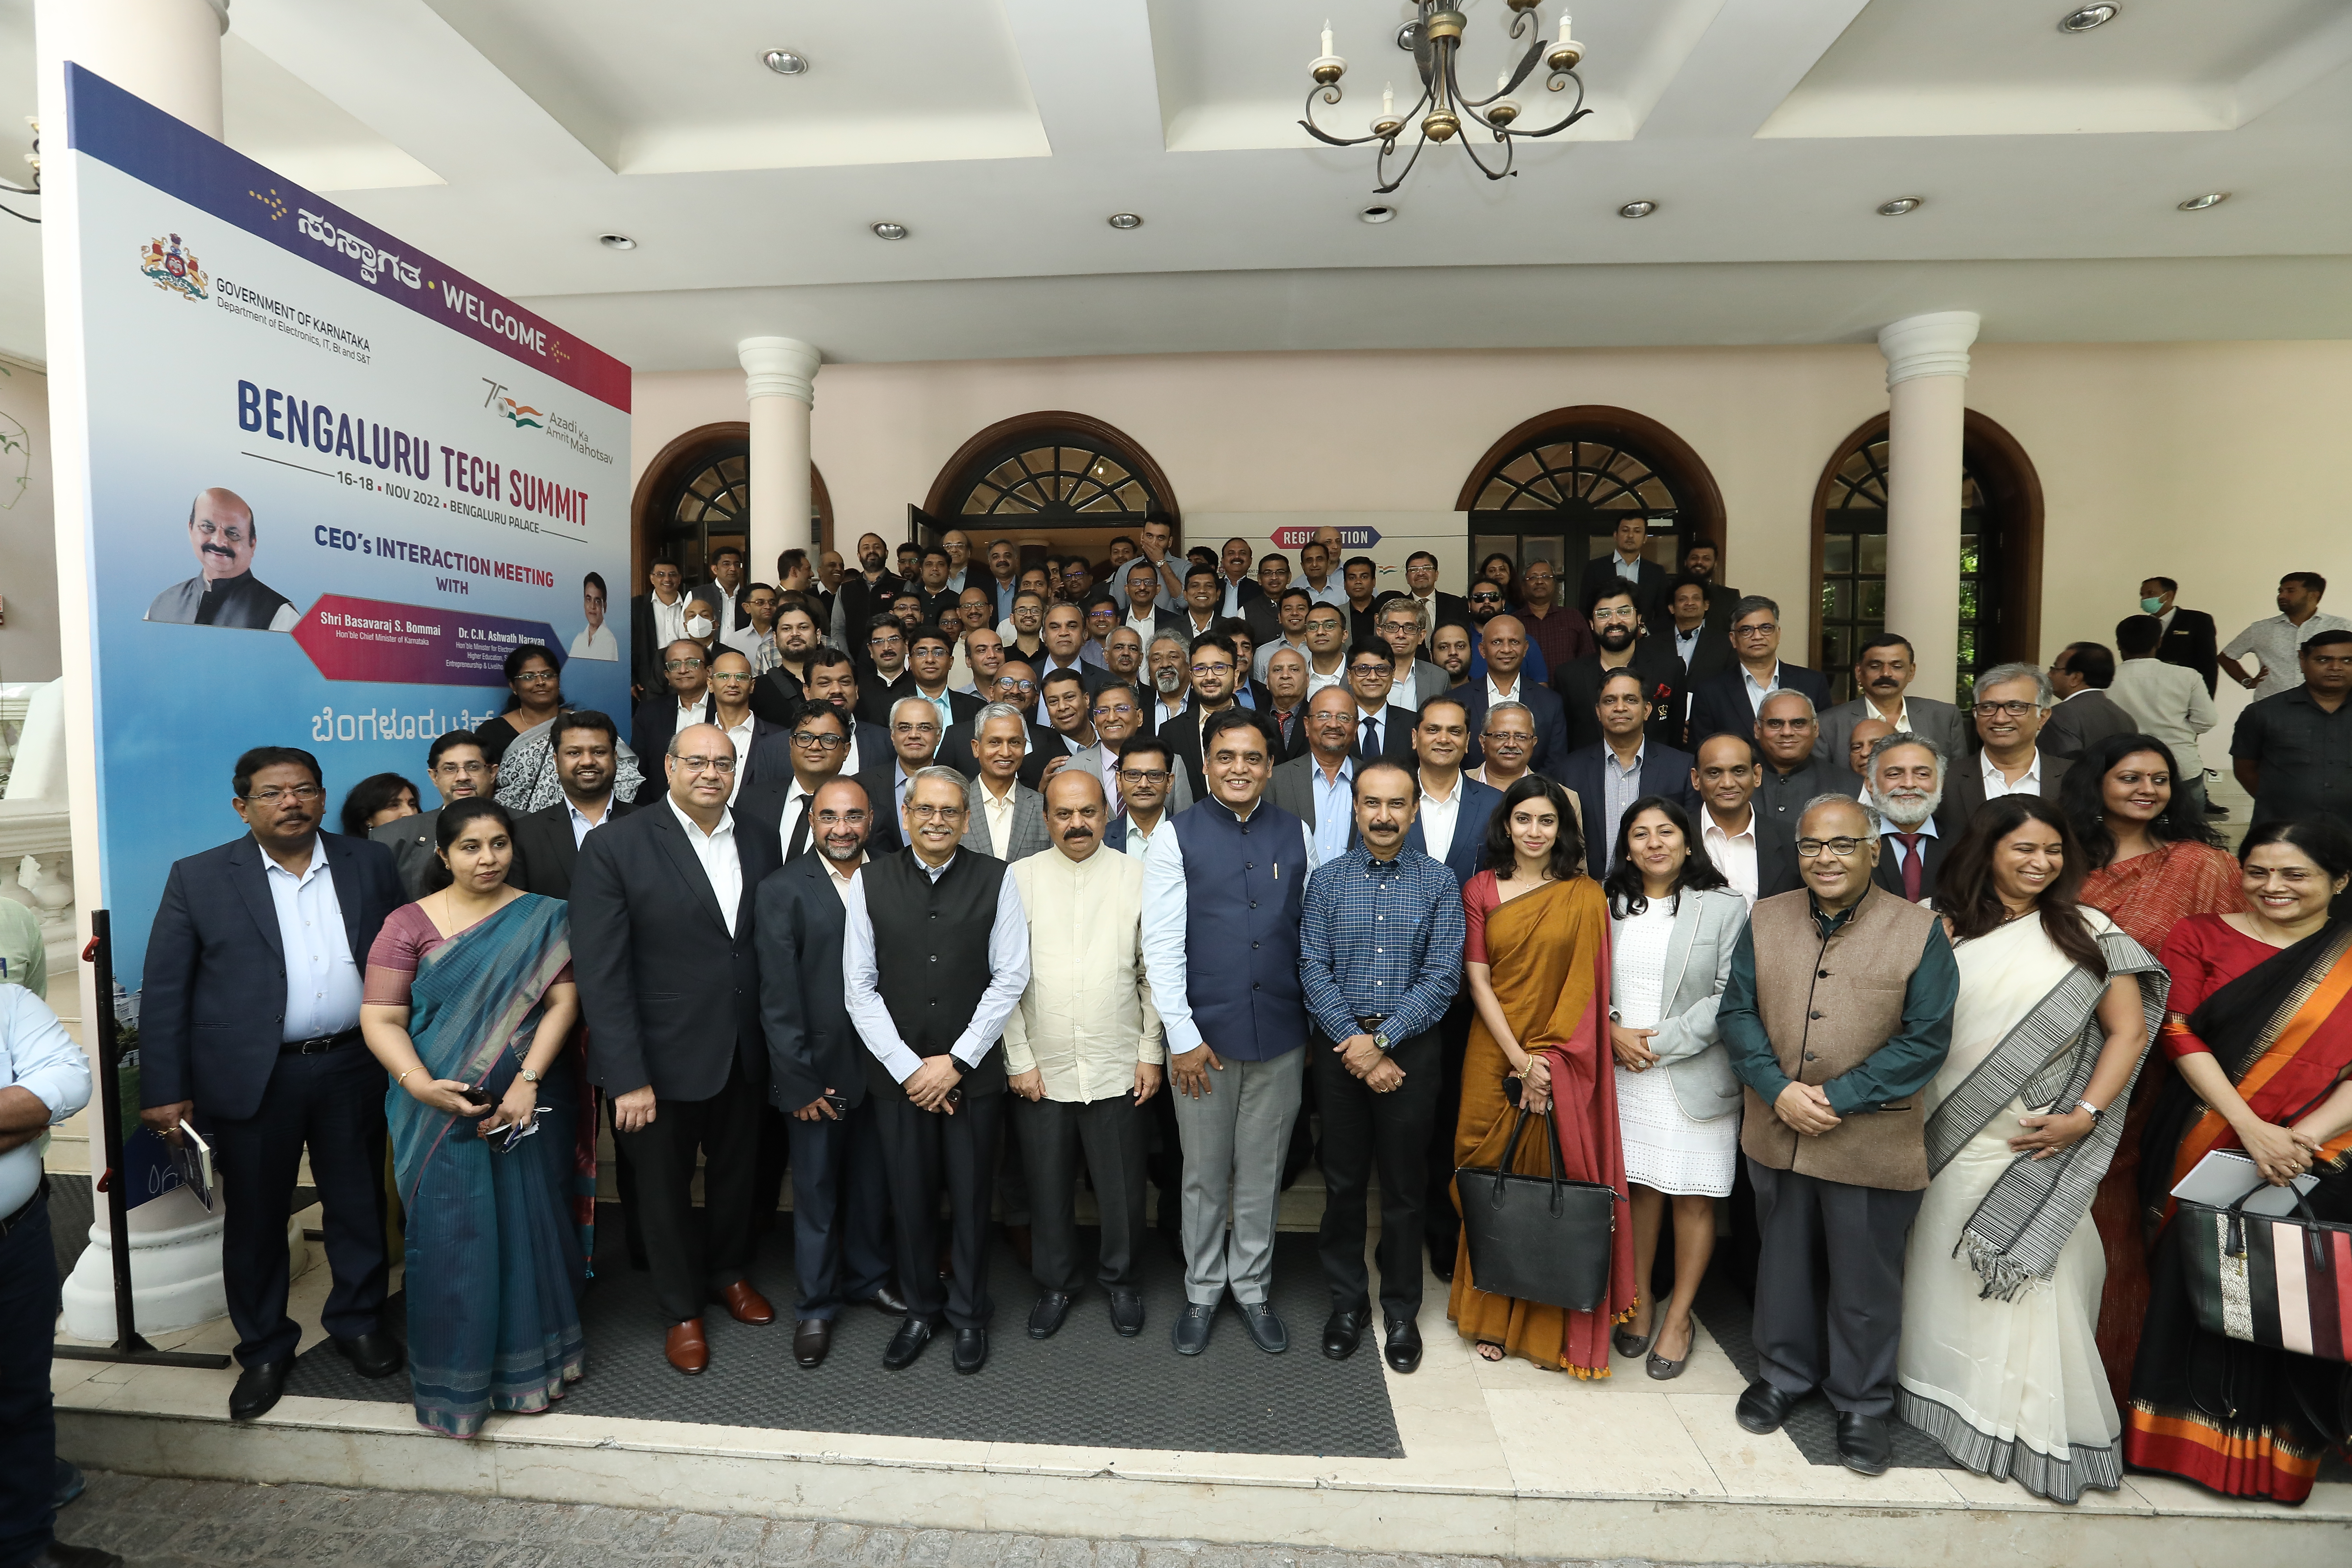 Bengaluru Tech Summit – 25th years of Technology Leadership